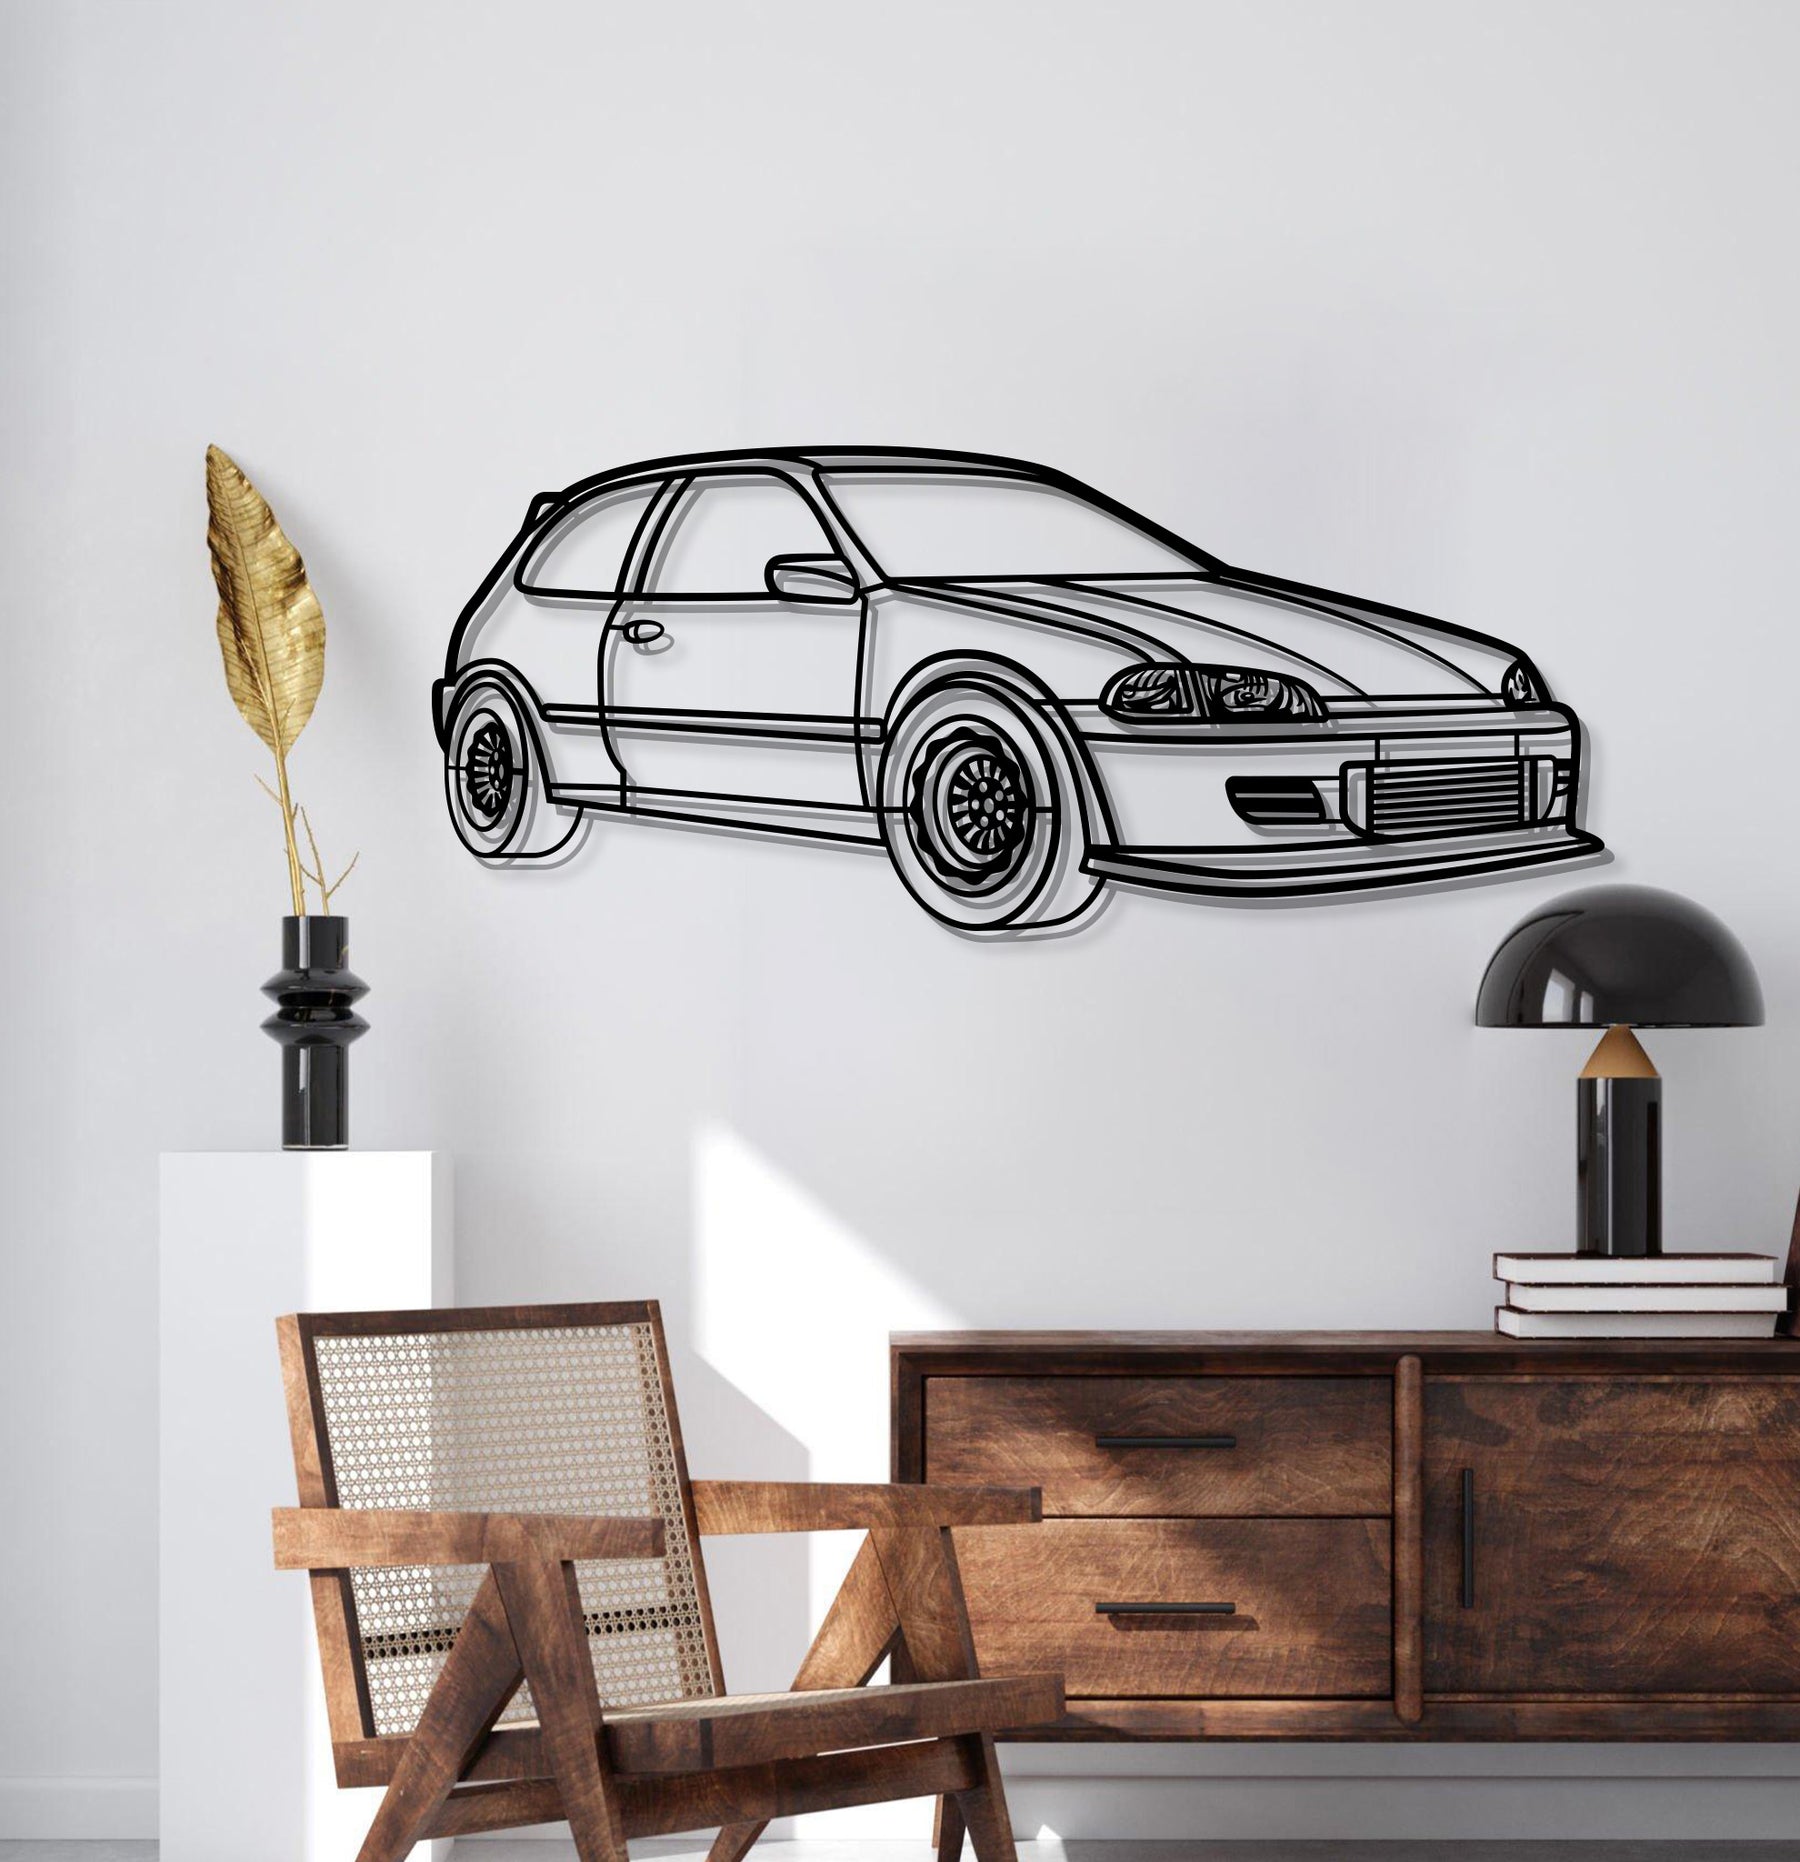 1993 Civic HB Drag Perspective Metal Car Wall Art - MT1163